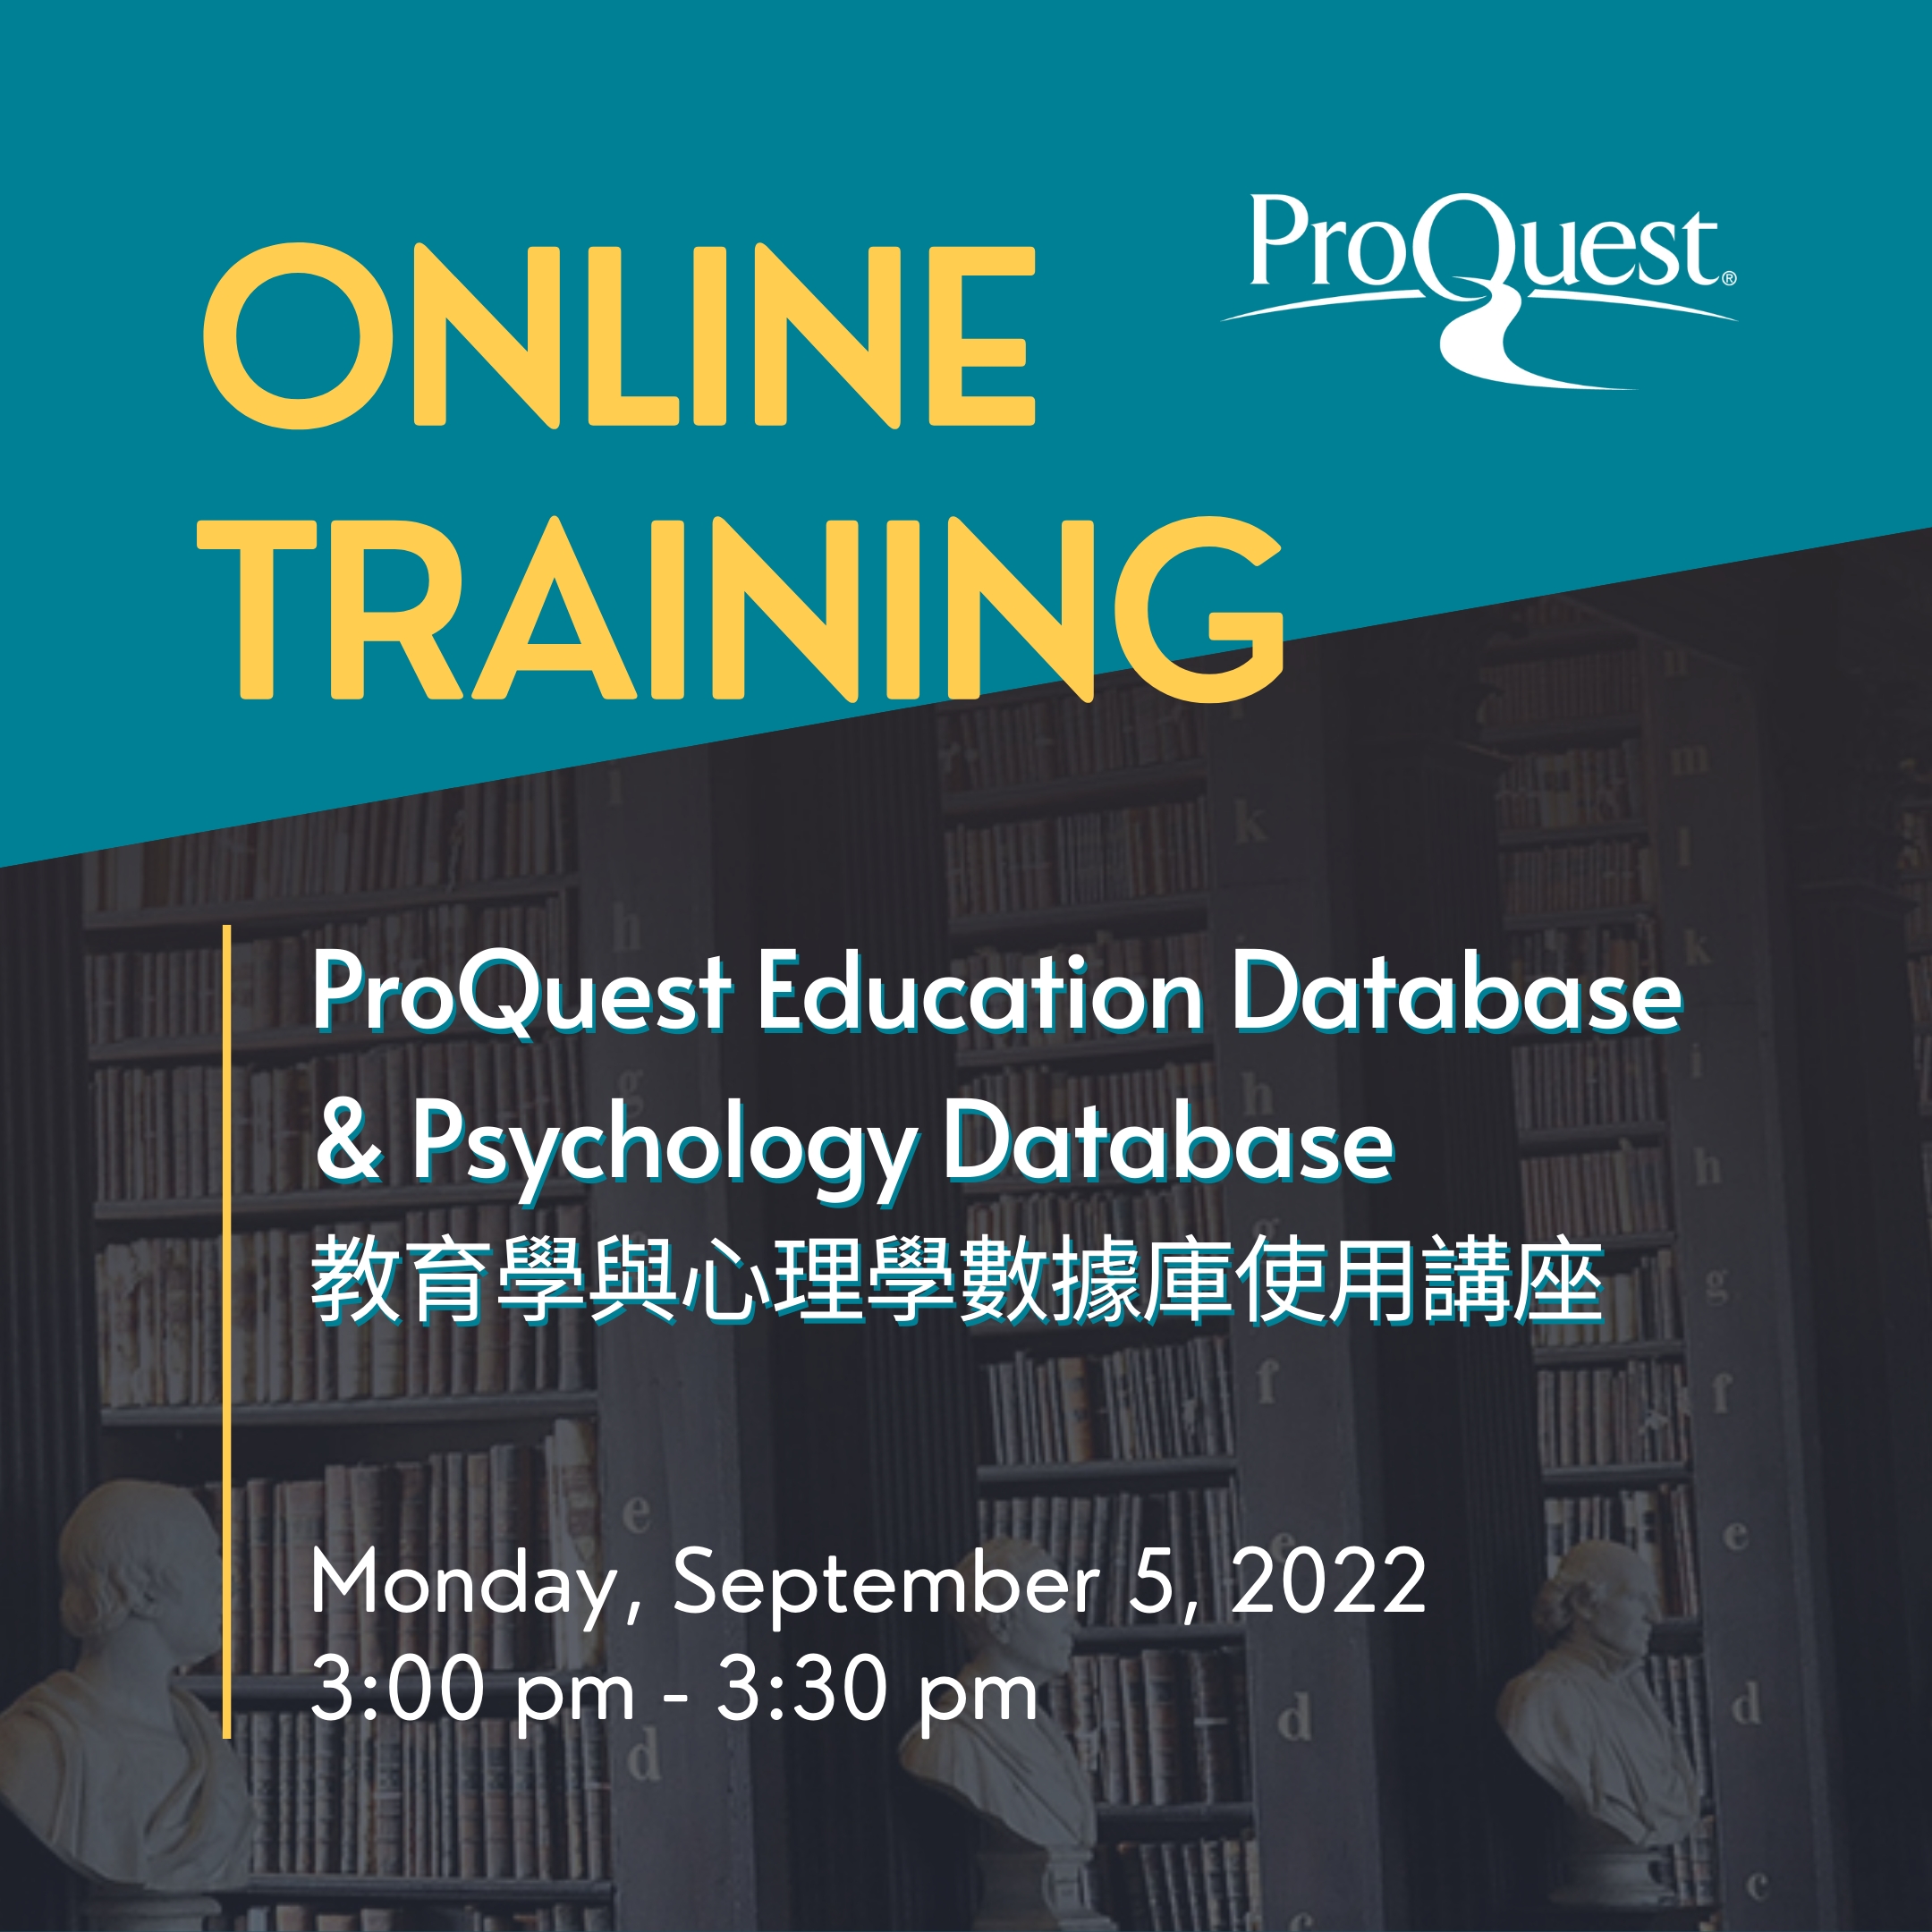 PROQUEST WEBINAR 網絡研討會: ProQuest Education Database & Psychology Database 教育學與心理學數據庫使用講座